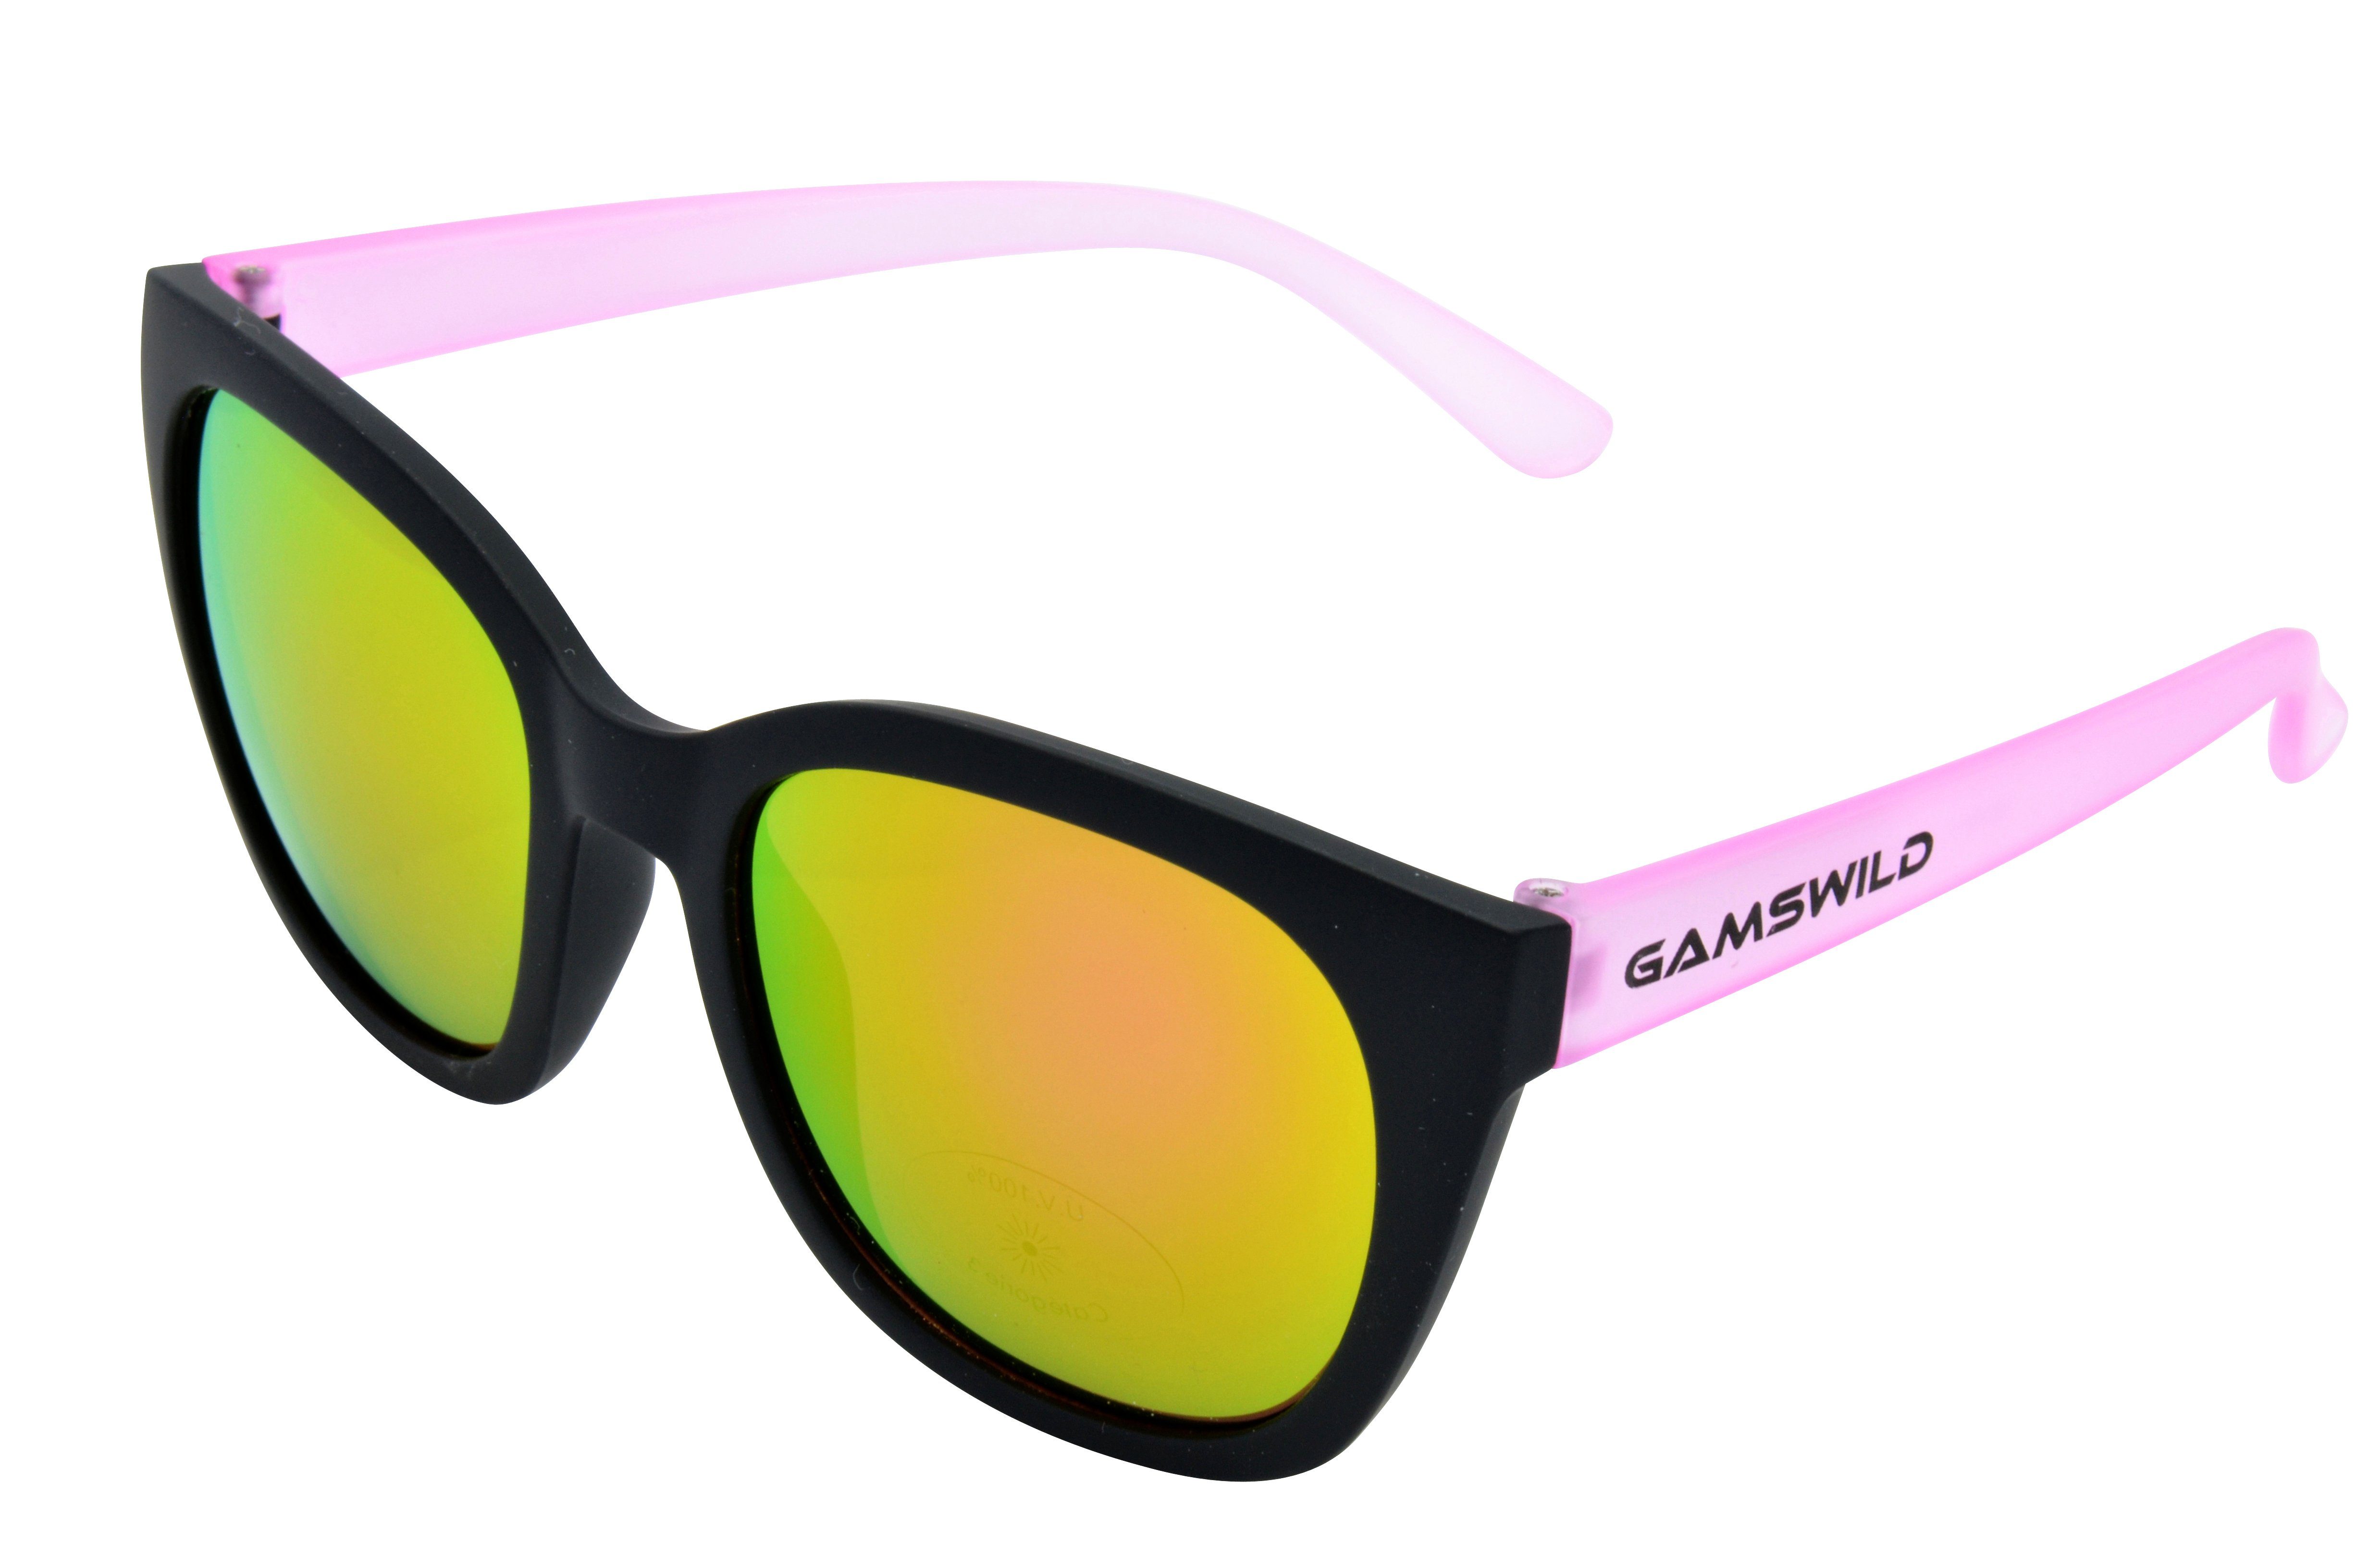 Gamswild Sonnenbrille WJ7517 GAMSKIDS Jugendbrille 8-18 Jahre Kinderbrille Mädchen Damen kids Unisex, blau, pink, grau halbtransparenter Rahmen rosa